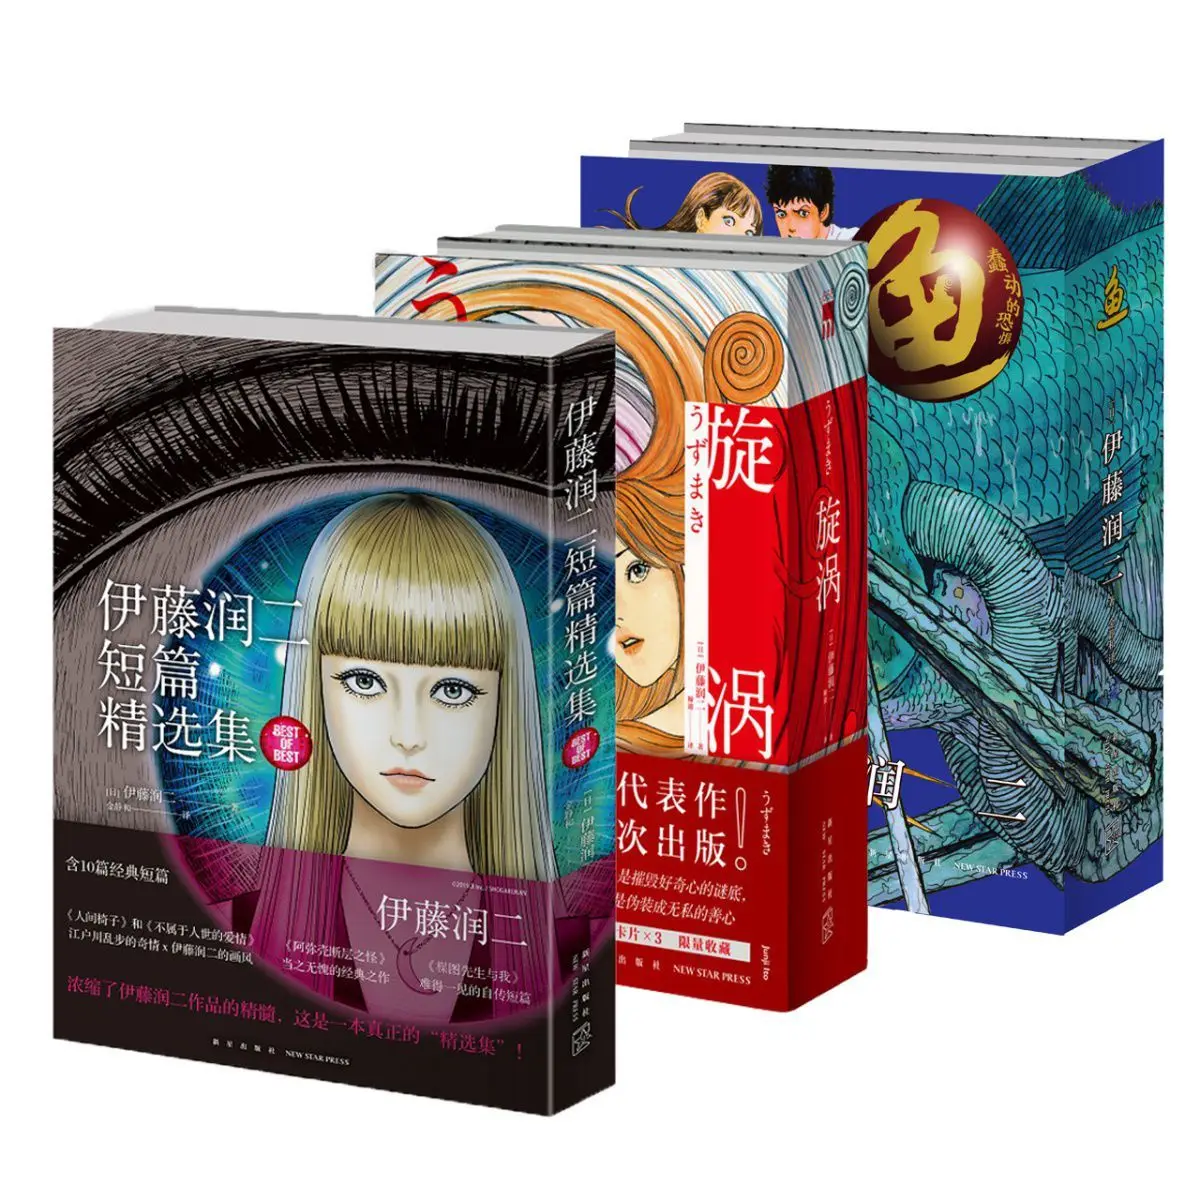 All 5 volumes Vortex/Ito Junji Short Story Collection/Fish Thriller Horror Suspense Japanese Comic Book